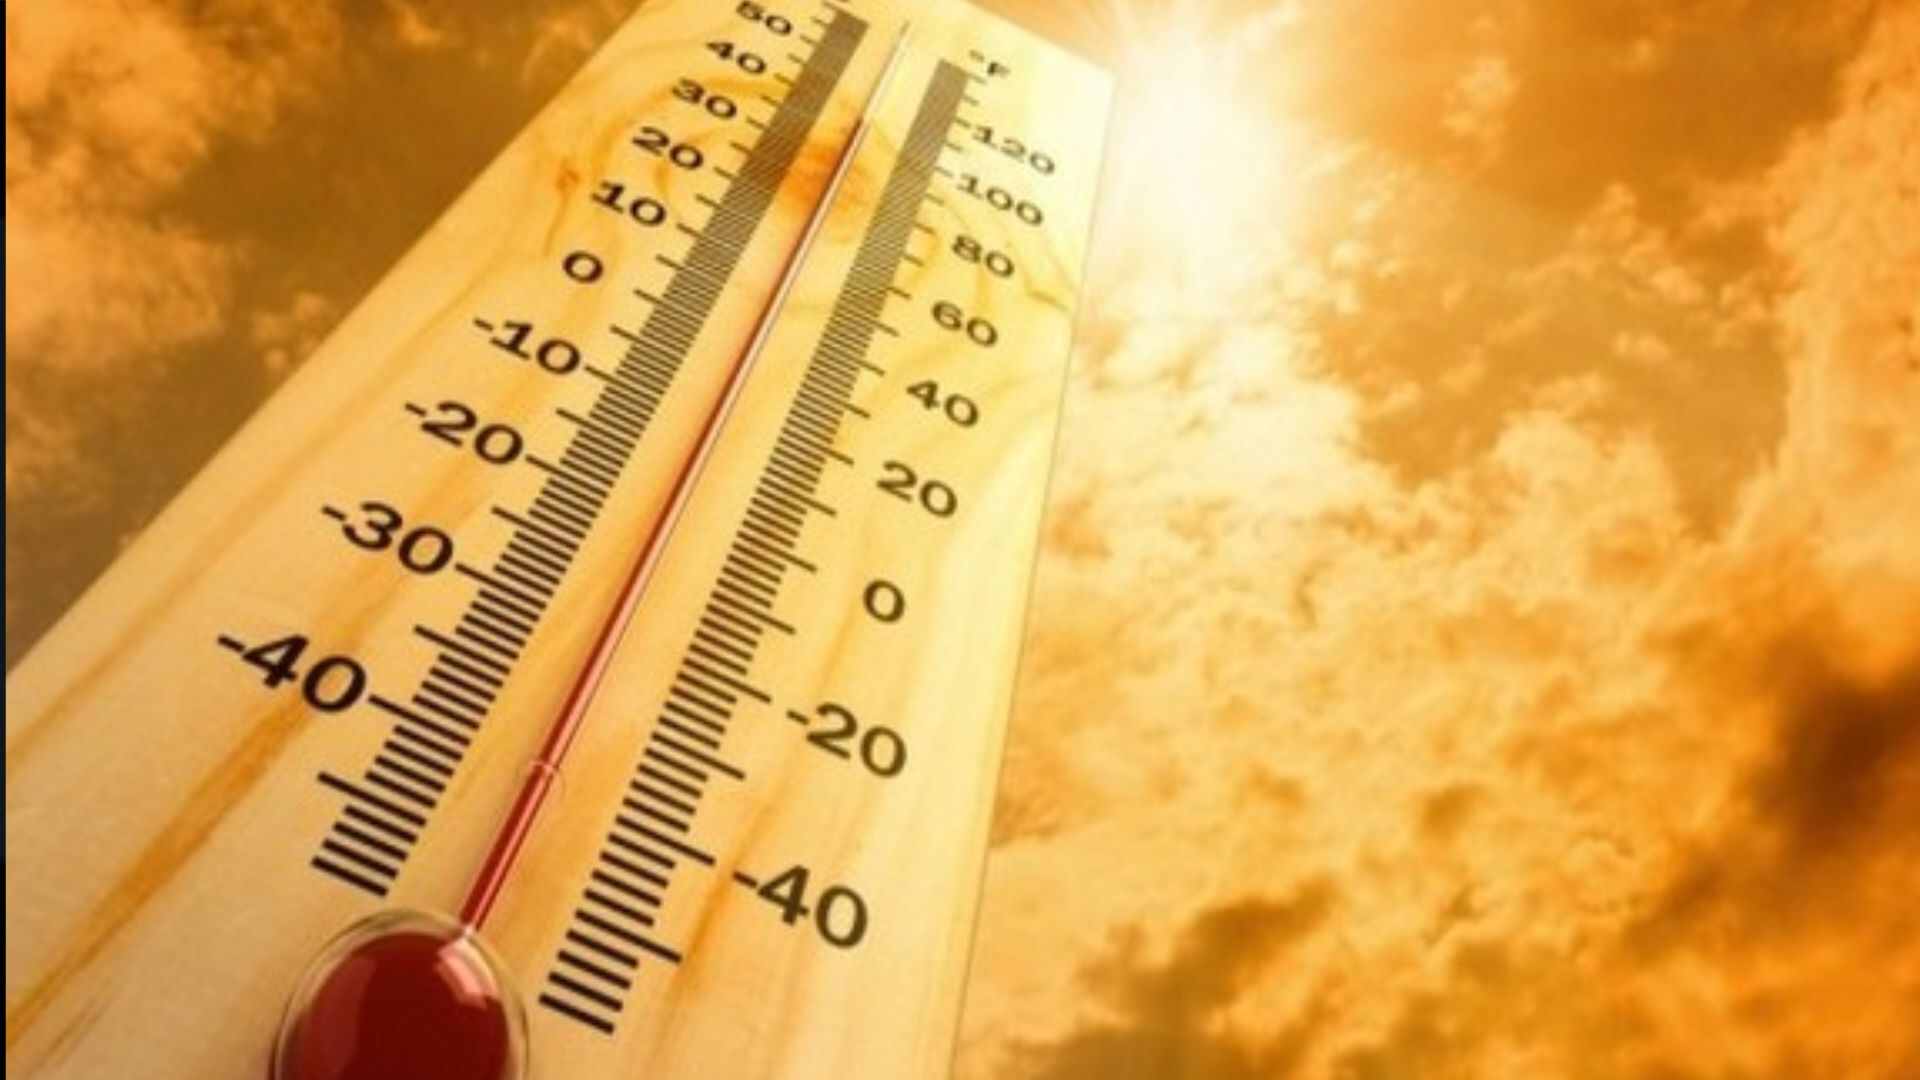 IMD has issued orange alert for Palakkad in Kerala  amid heatwaves